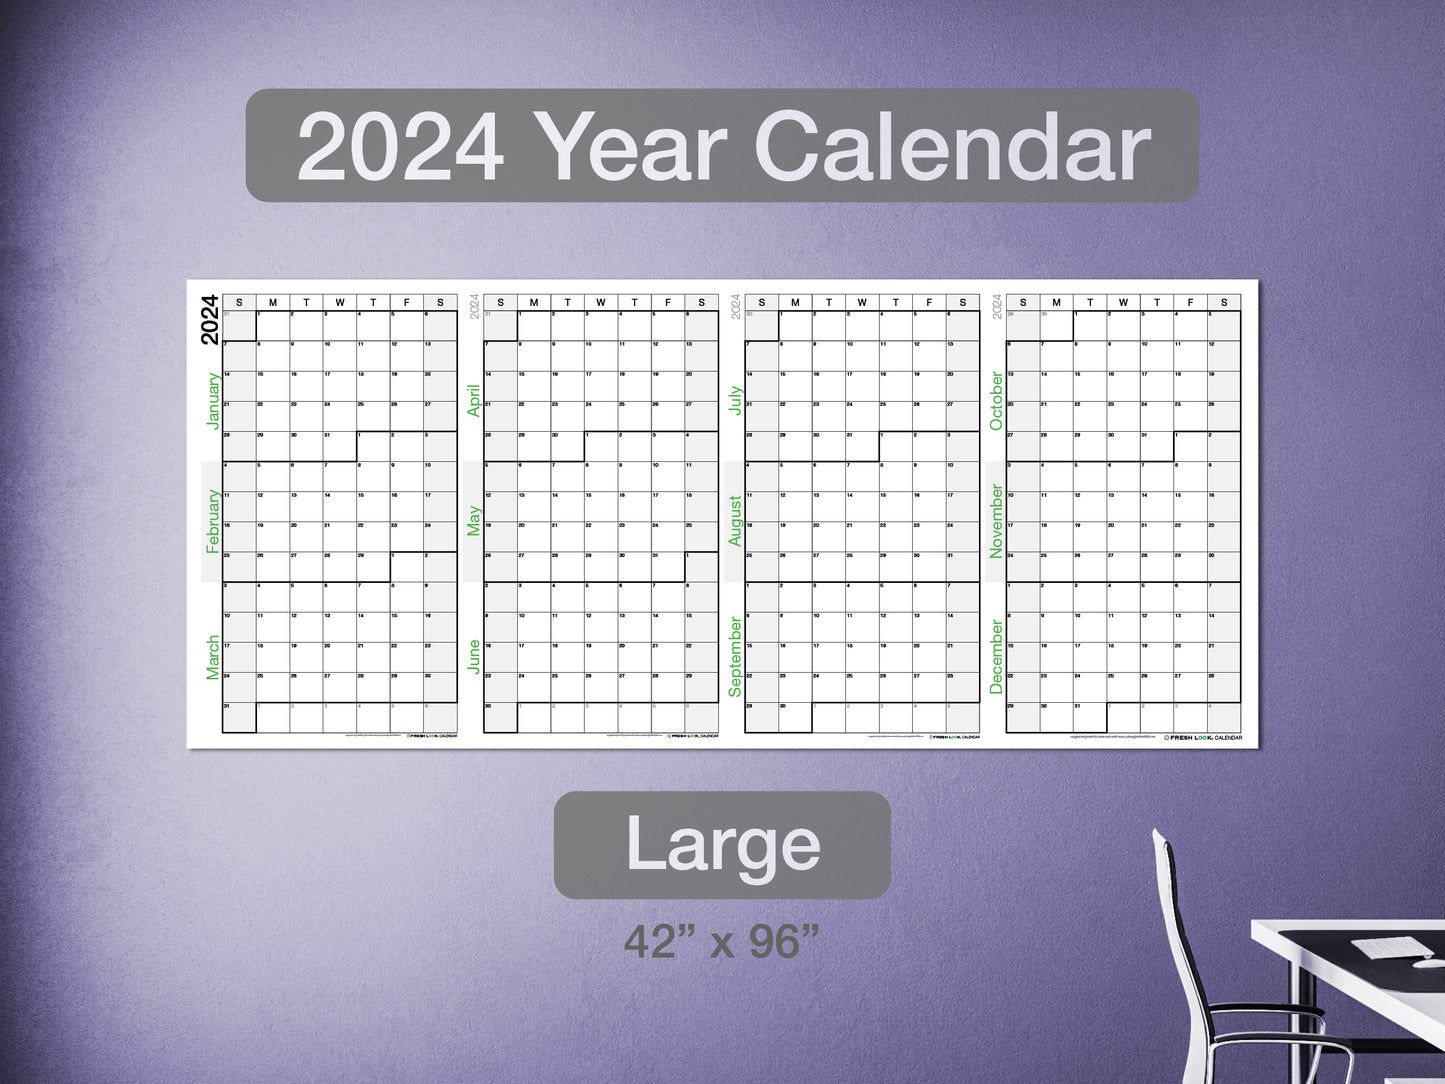 2024 Year Calendar Large